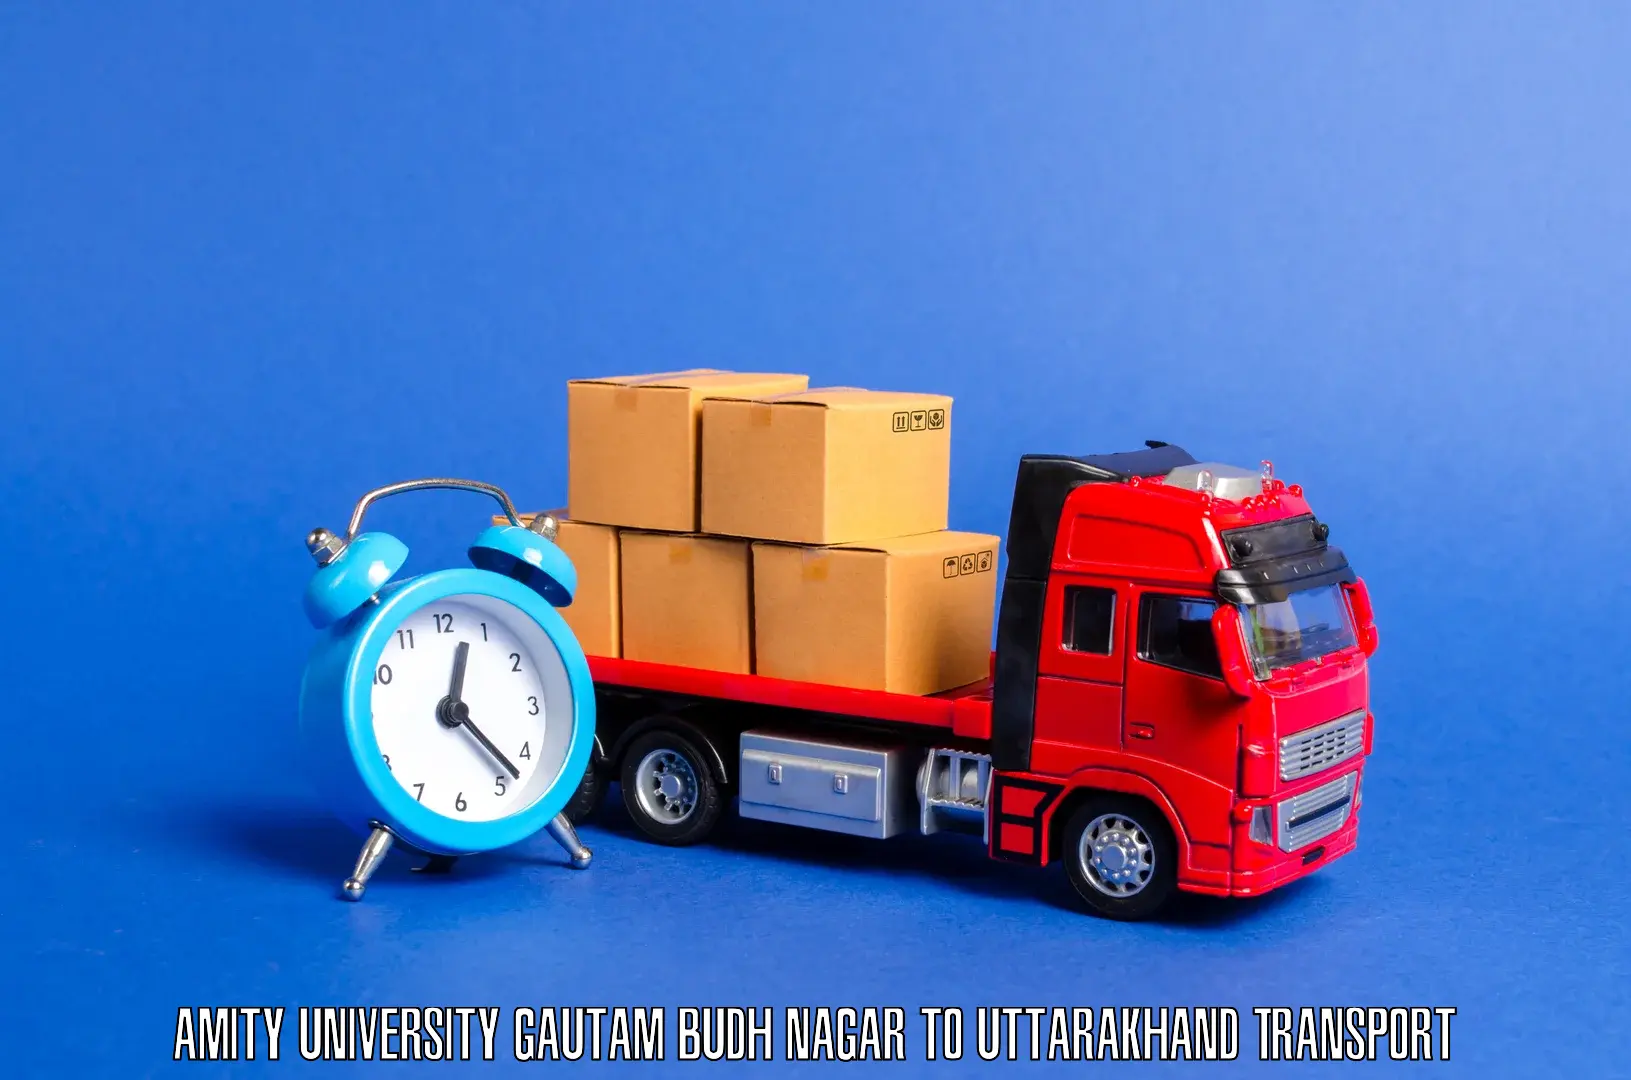 Daily parcel service transport in Amity University Gautam Budh Nagar to Nainital